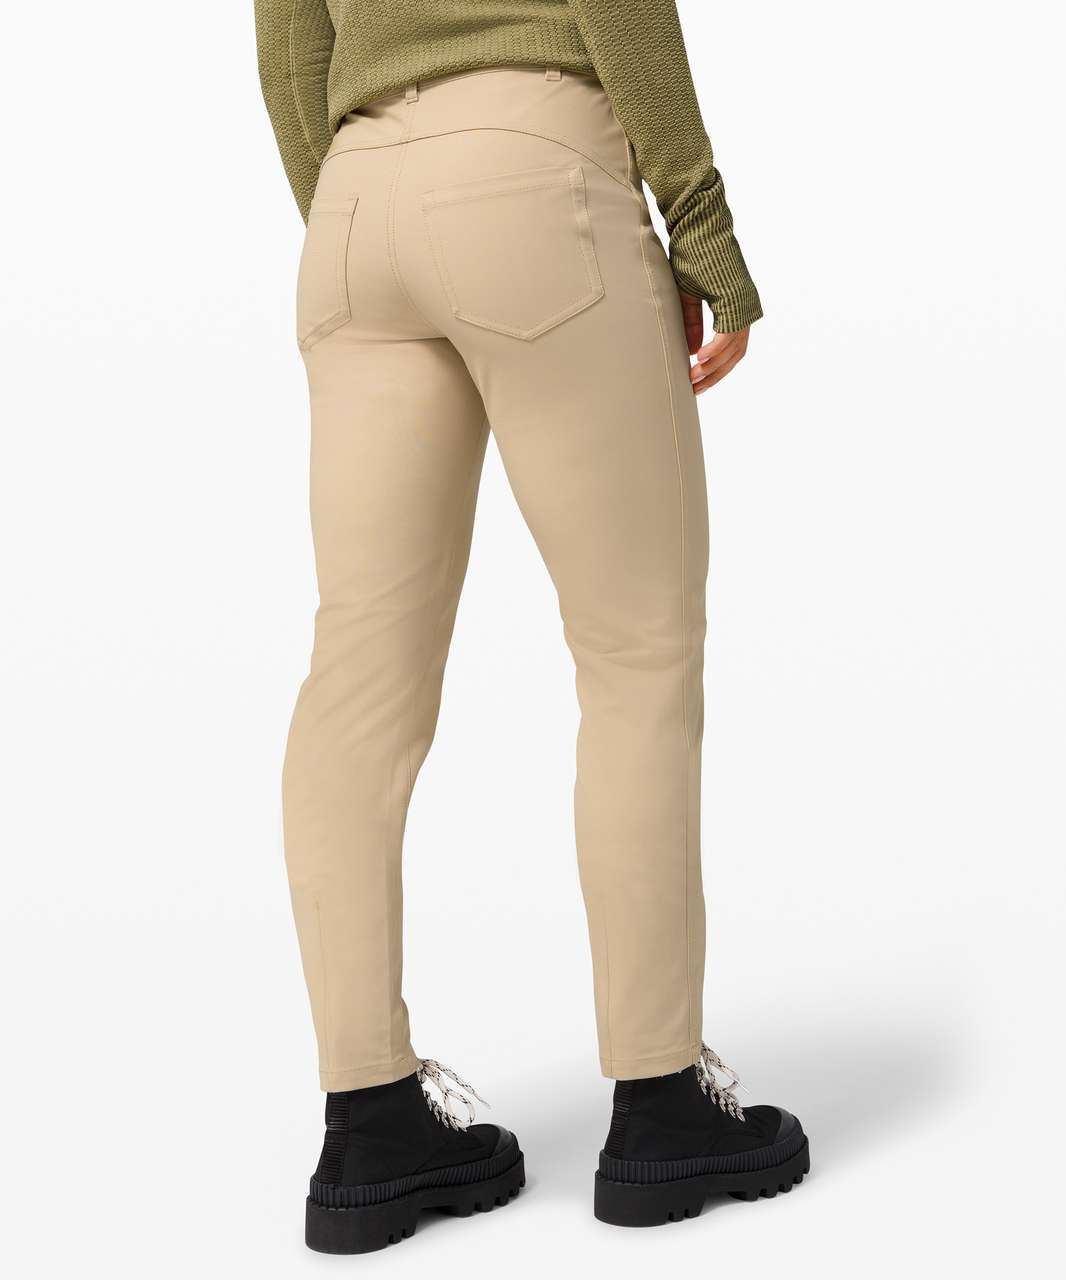 lululemon City Sleek 5pkt Wide Leg Utilitech Pant BONE Size 28 New